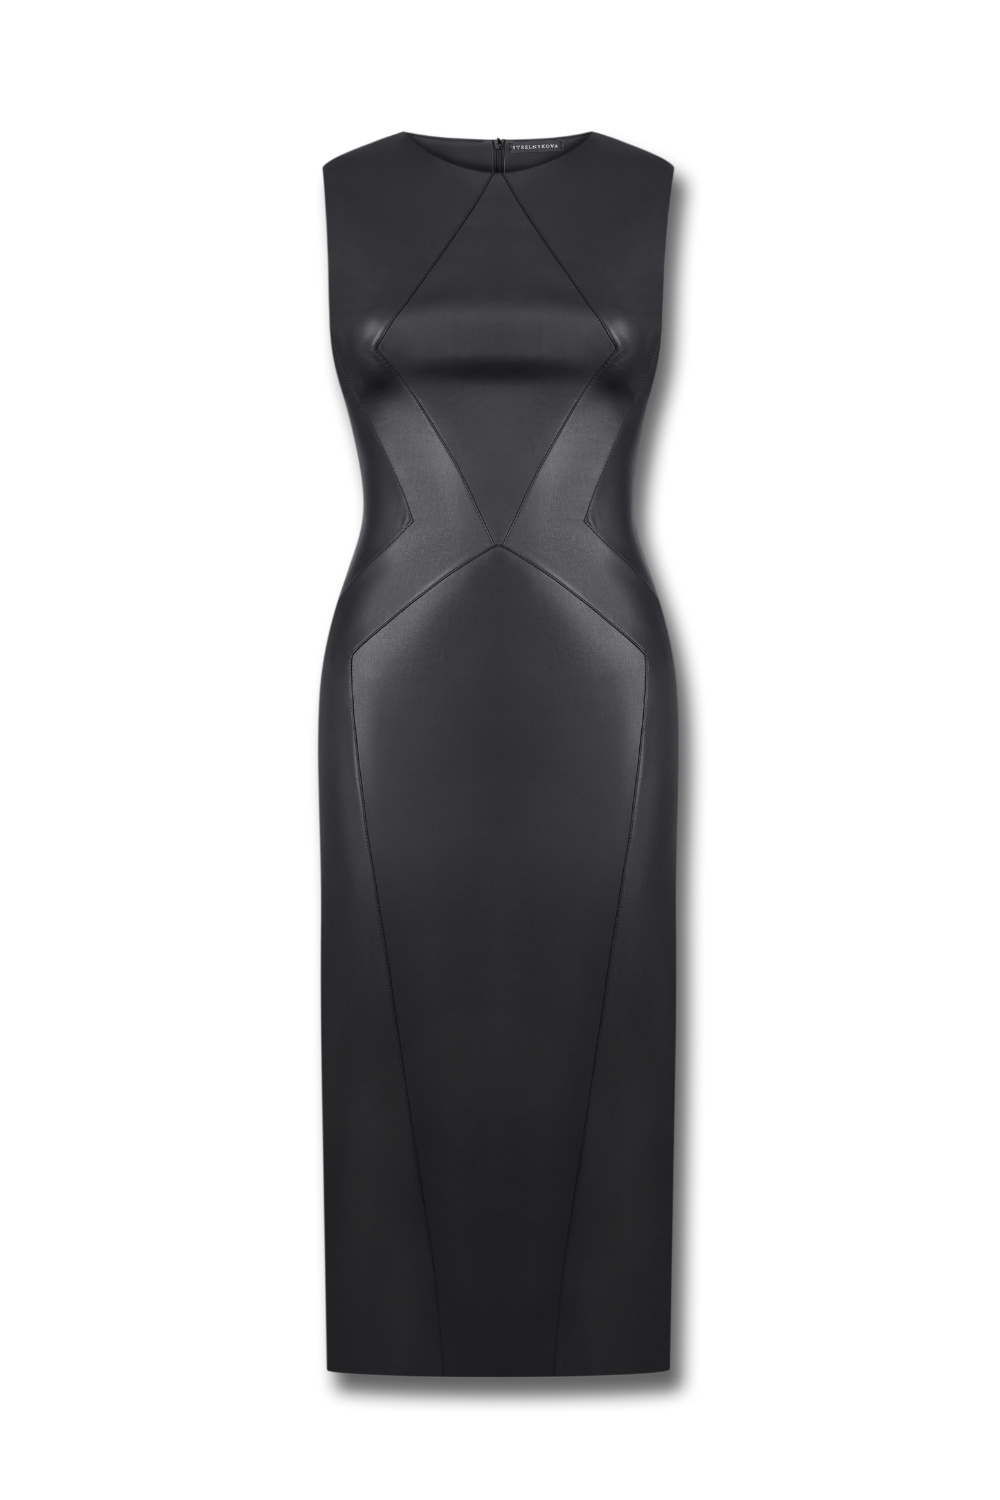 A017-814 Сукня з еко-шкіри чорна (STRELNYKOVA)